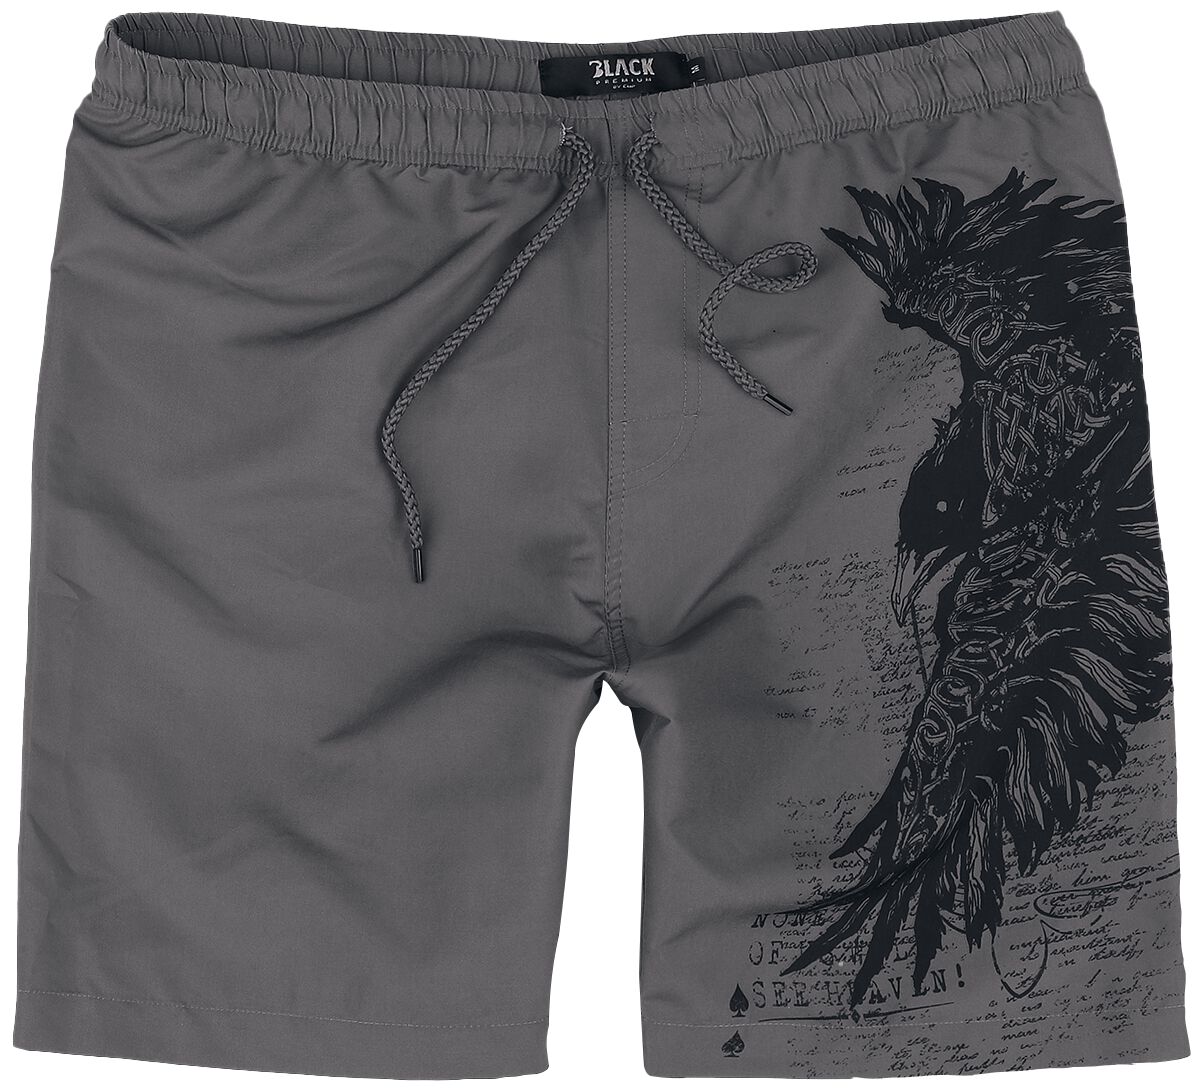 Black Premium by EMP Swim Shorts with Raven Print Badeshort grau in XL